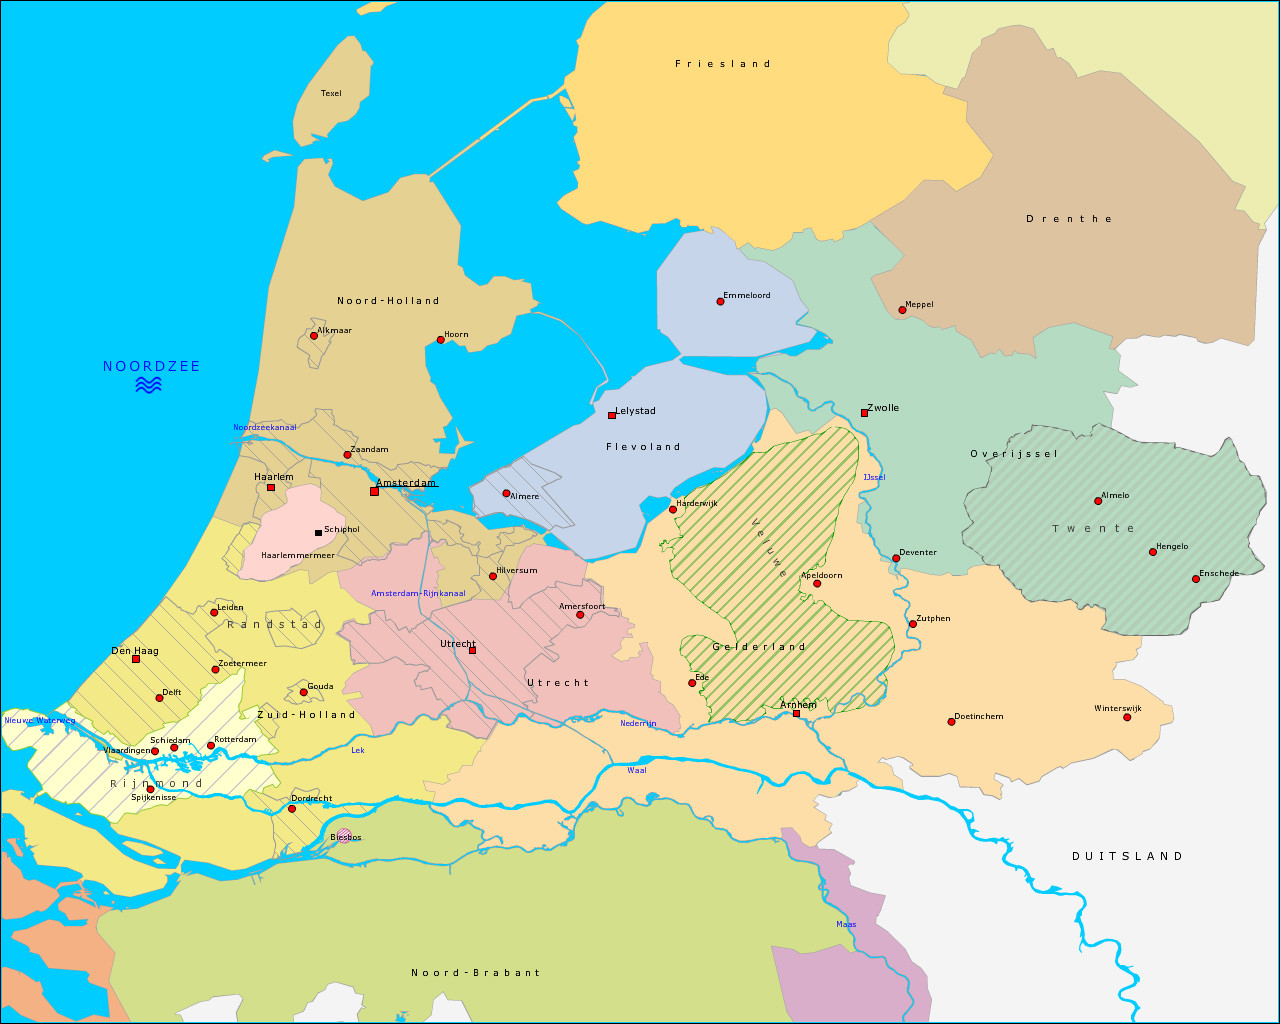 periode hoe vaak Teleurstelling Topografie Midden-Nederland | www.topomania.net